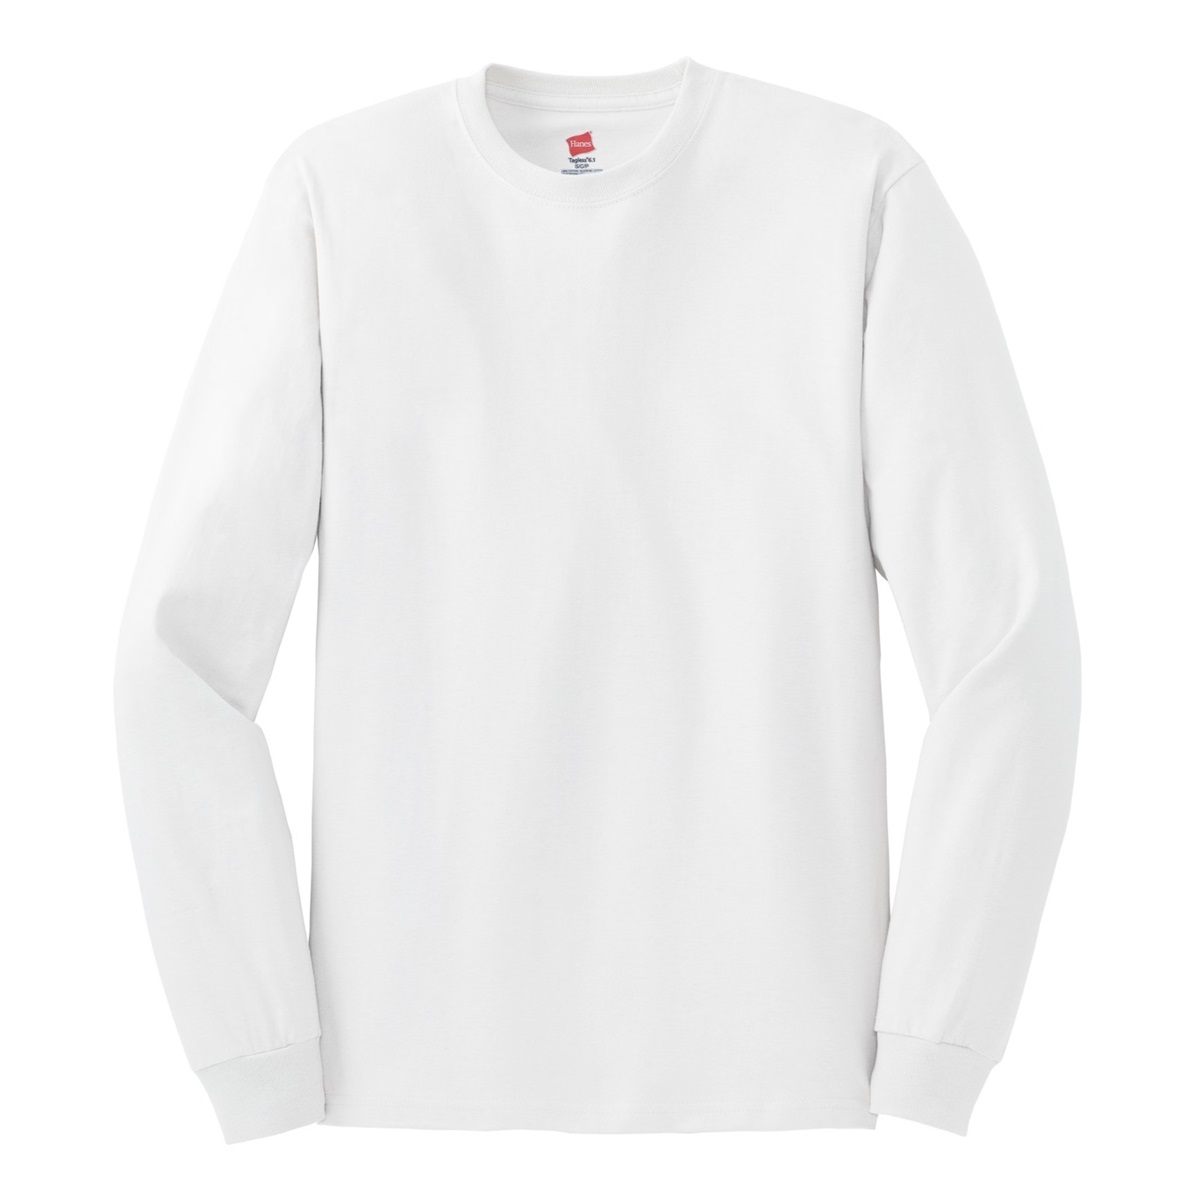 Hanes 5586 Tagless Cotton Long Sleeve T-Shirt - White | FullSource.com